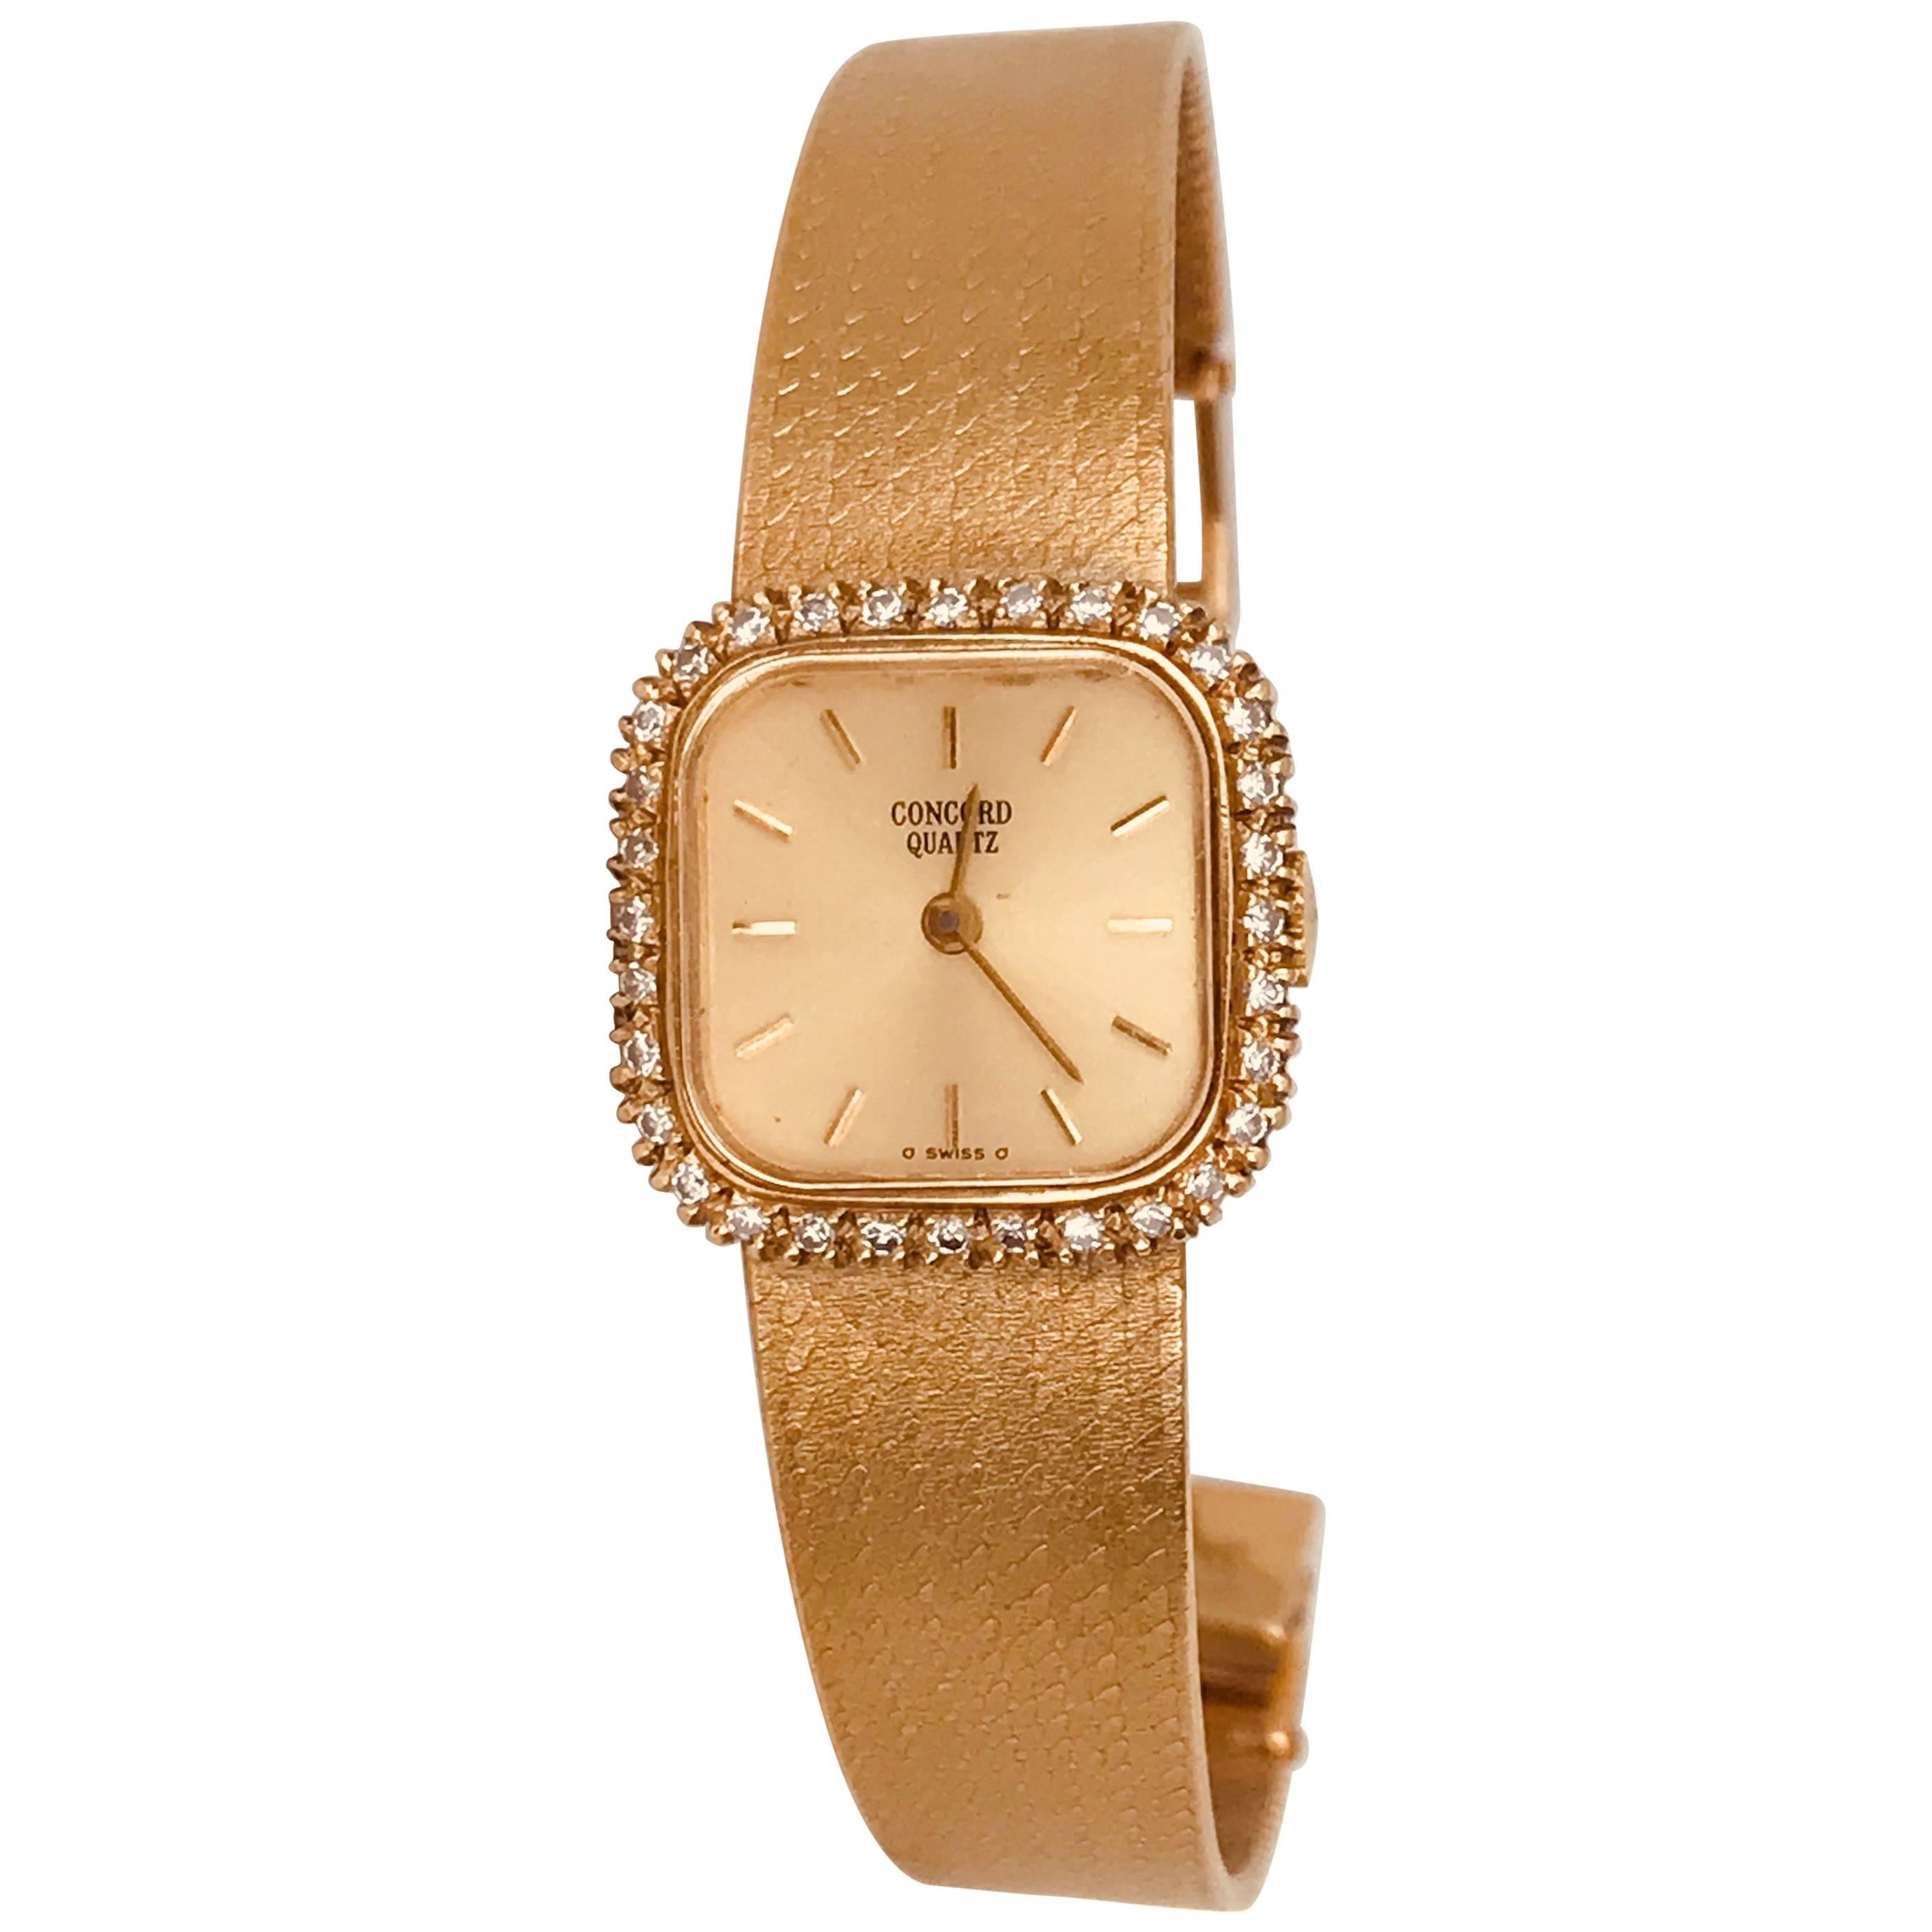 Concord Ladies Diamond Mesh Watch, Quartz Movement, Retro For Sale